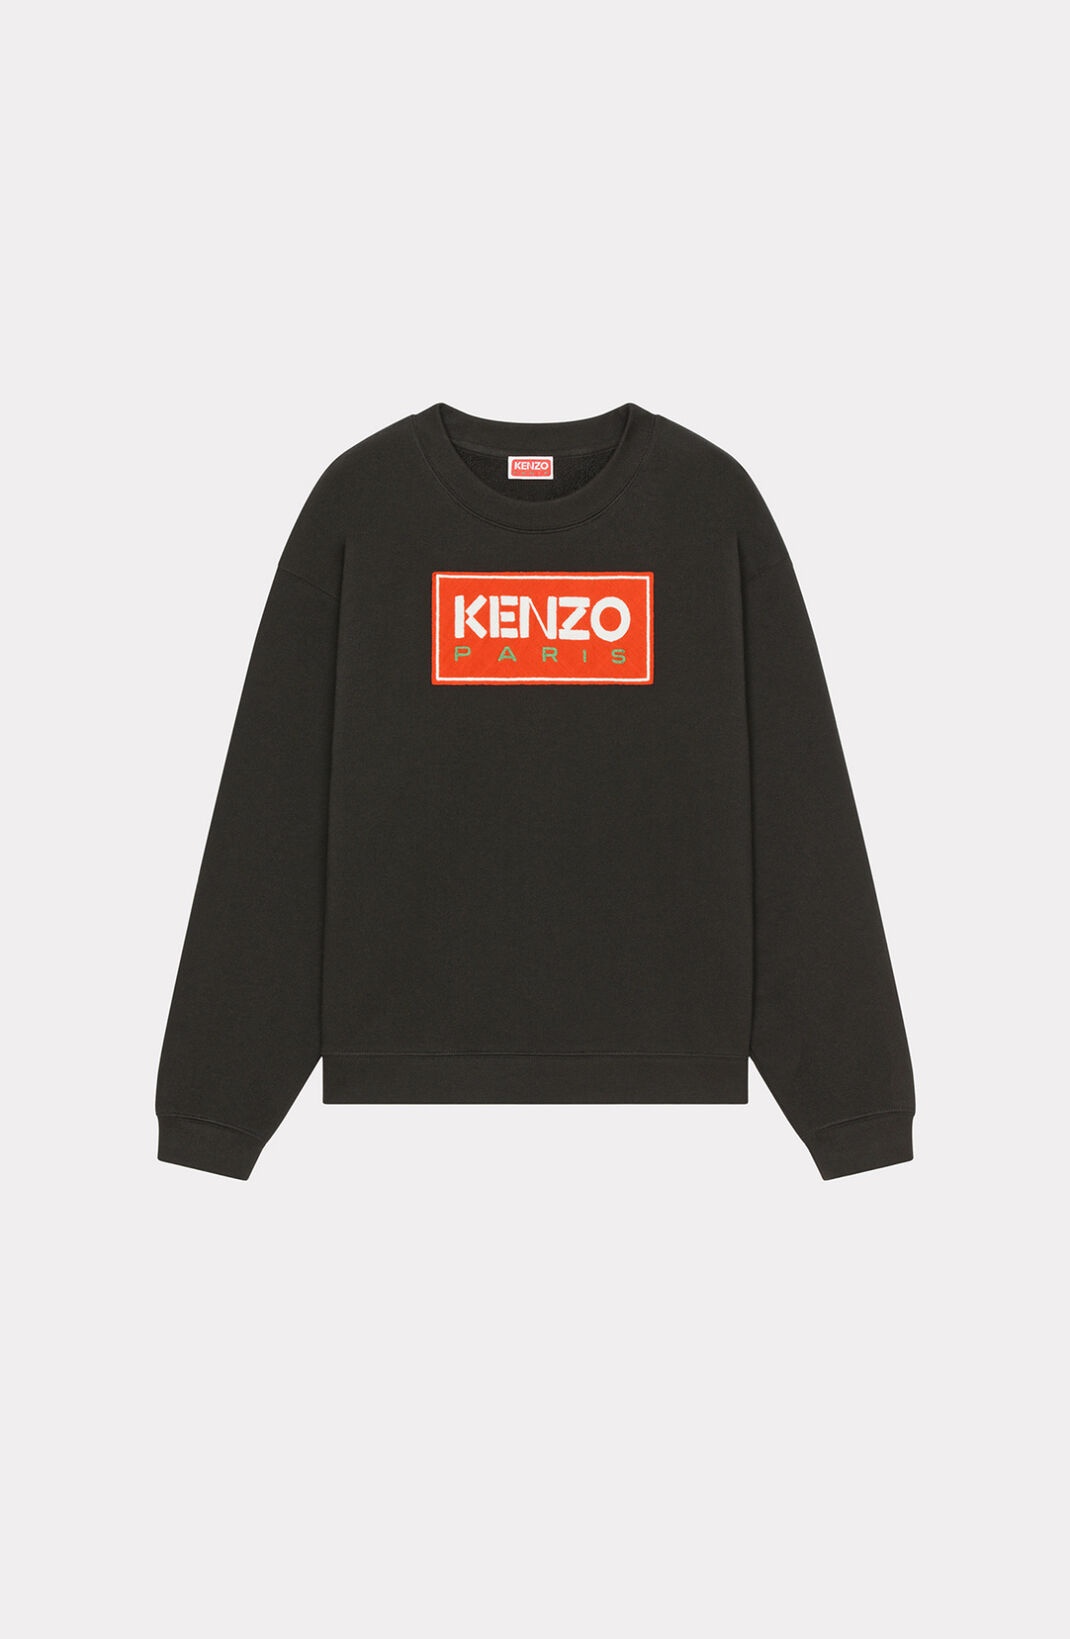 KENZO Paris sweatshirt - 1